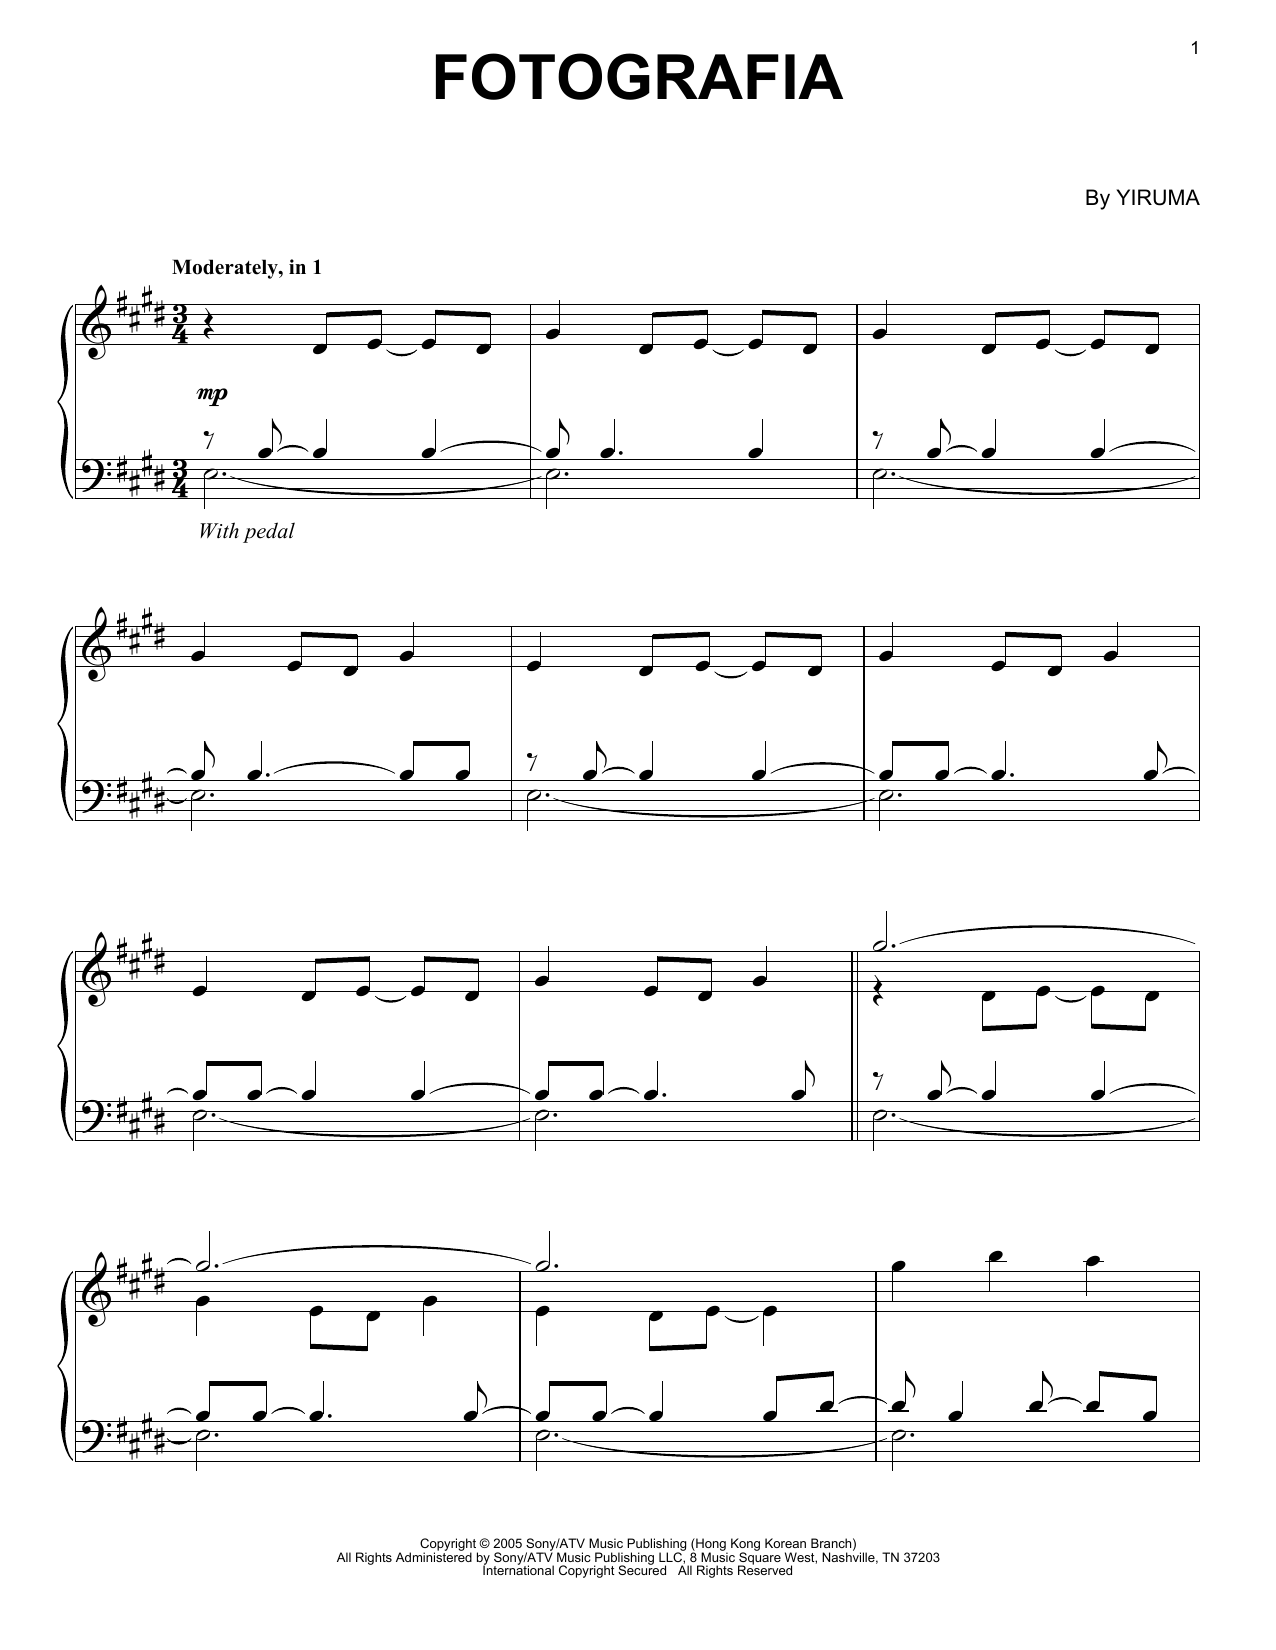 Yiruma Fotografia sheet music notes and chords arranged for Easy Piano